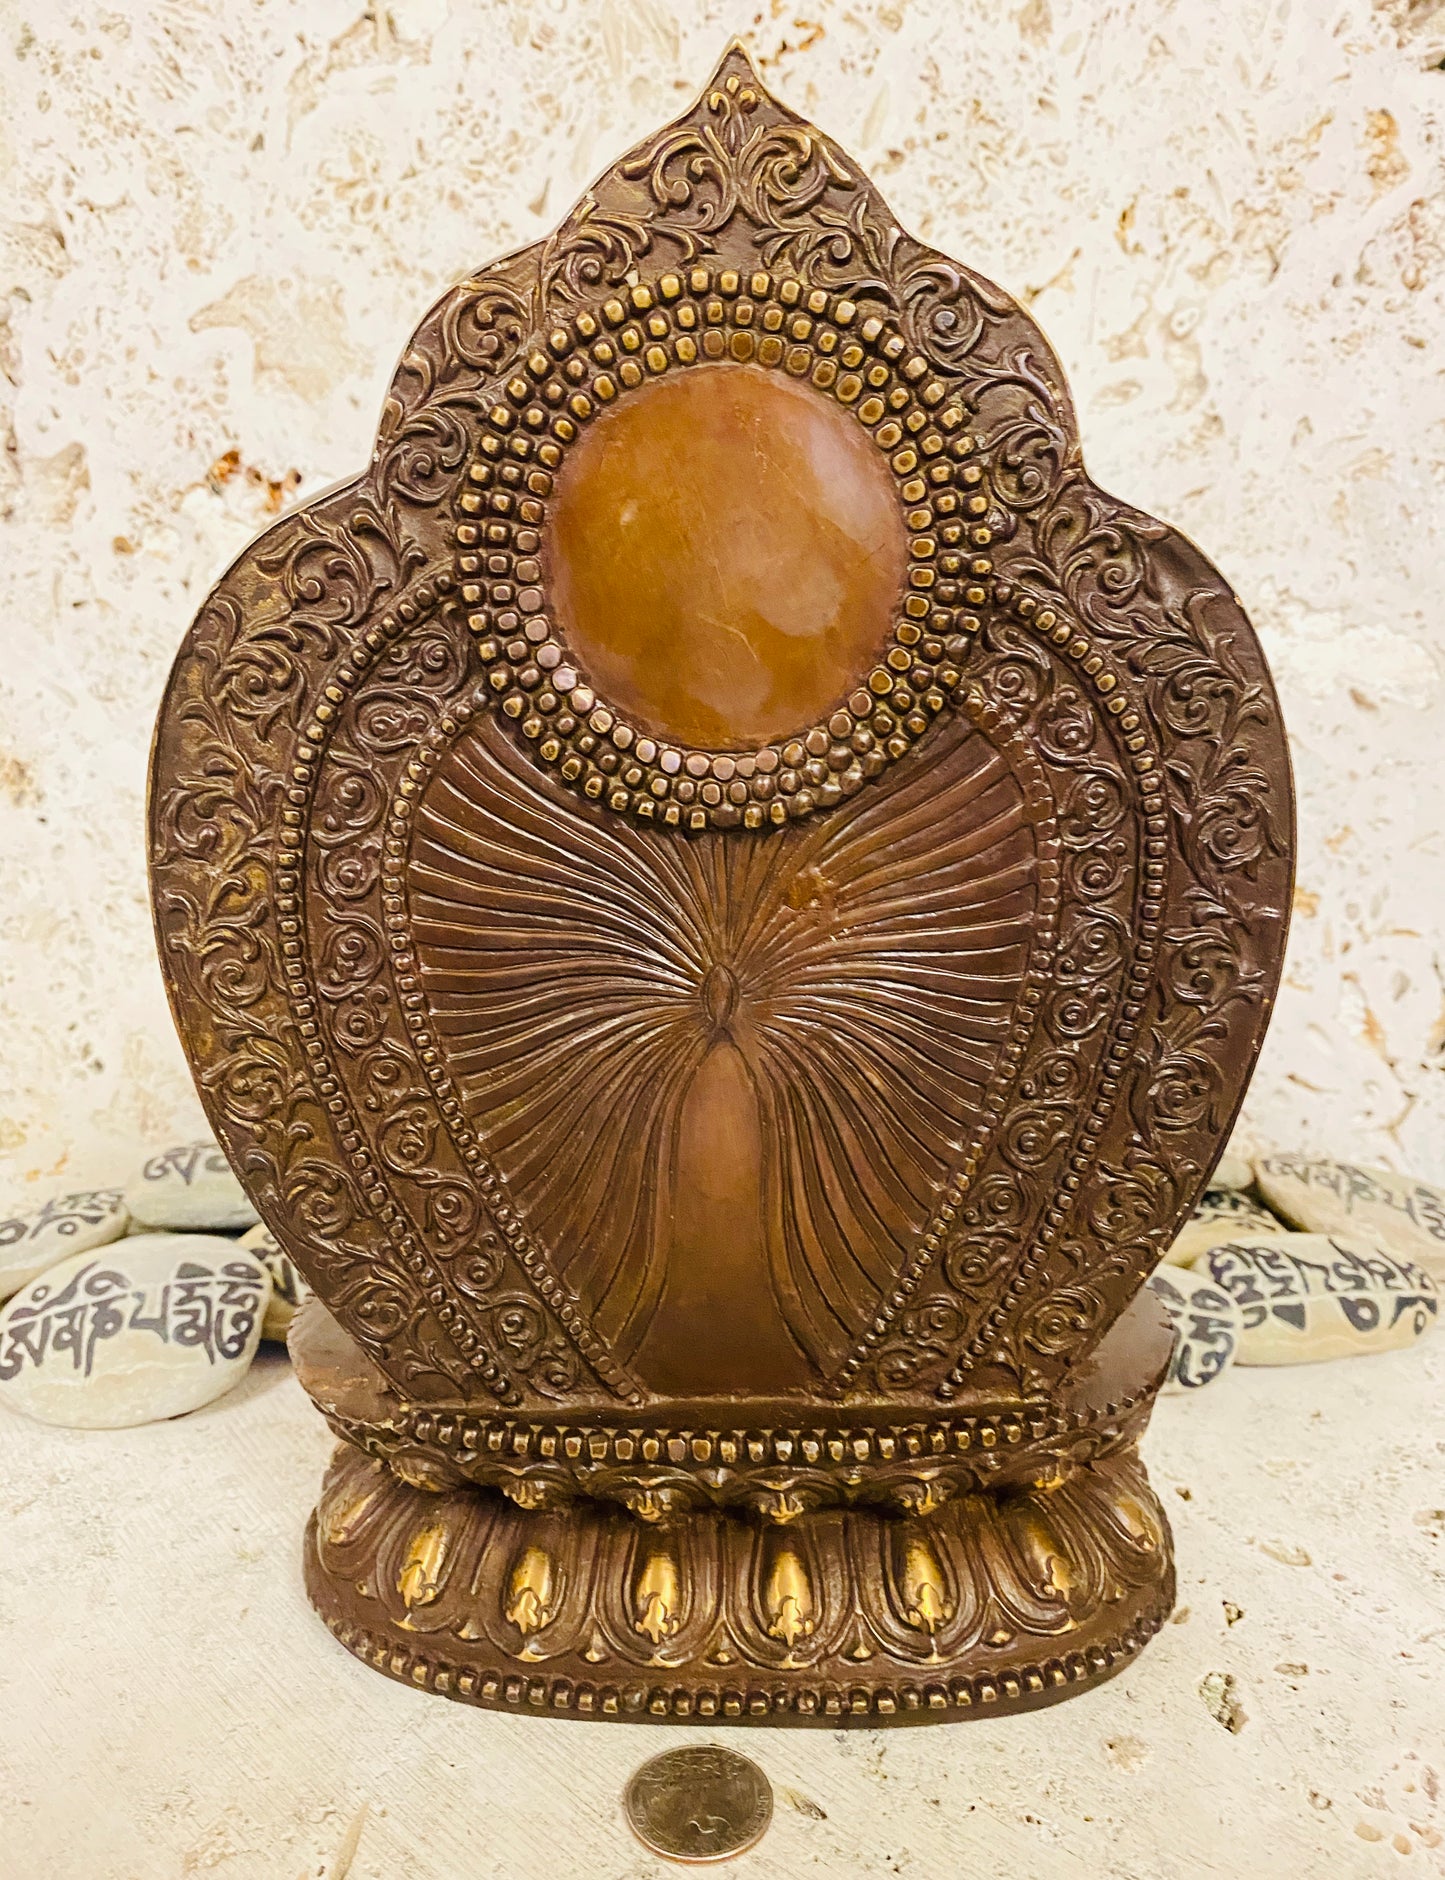 Hand Finished Brass Medicine Buddha Statue - 27cm x 18cm